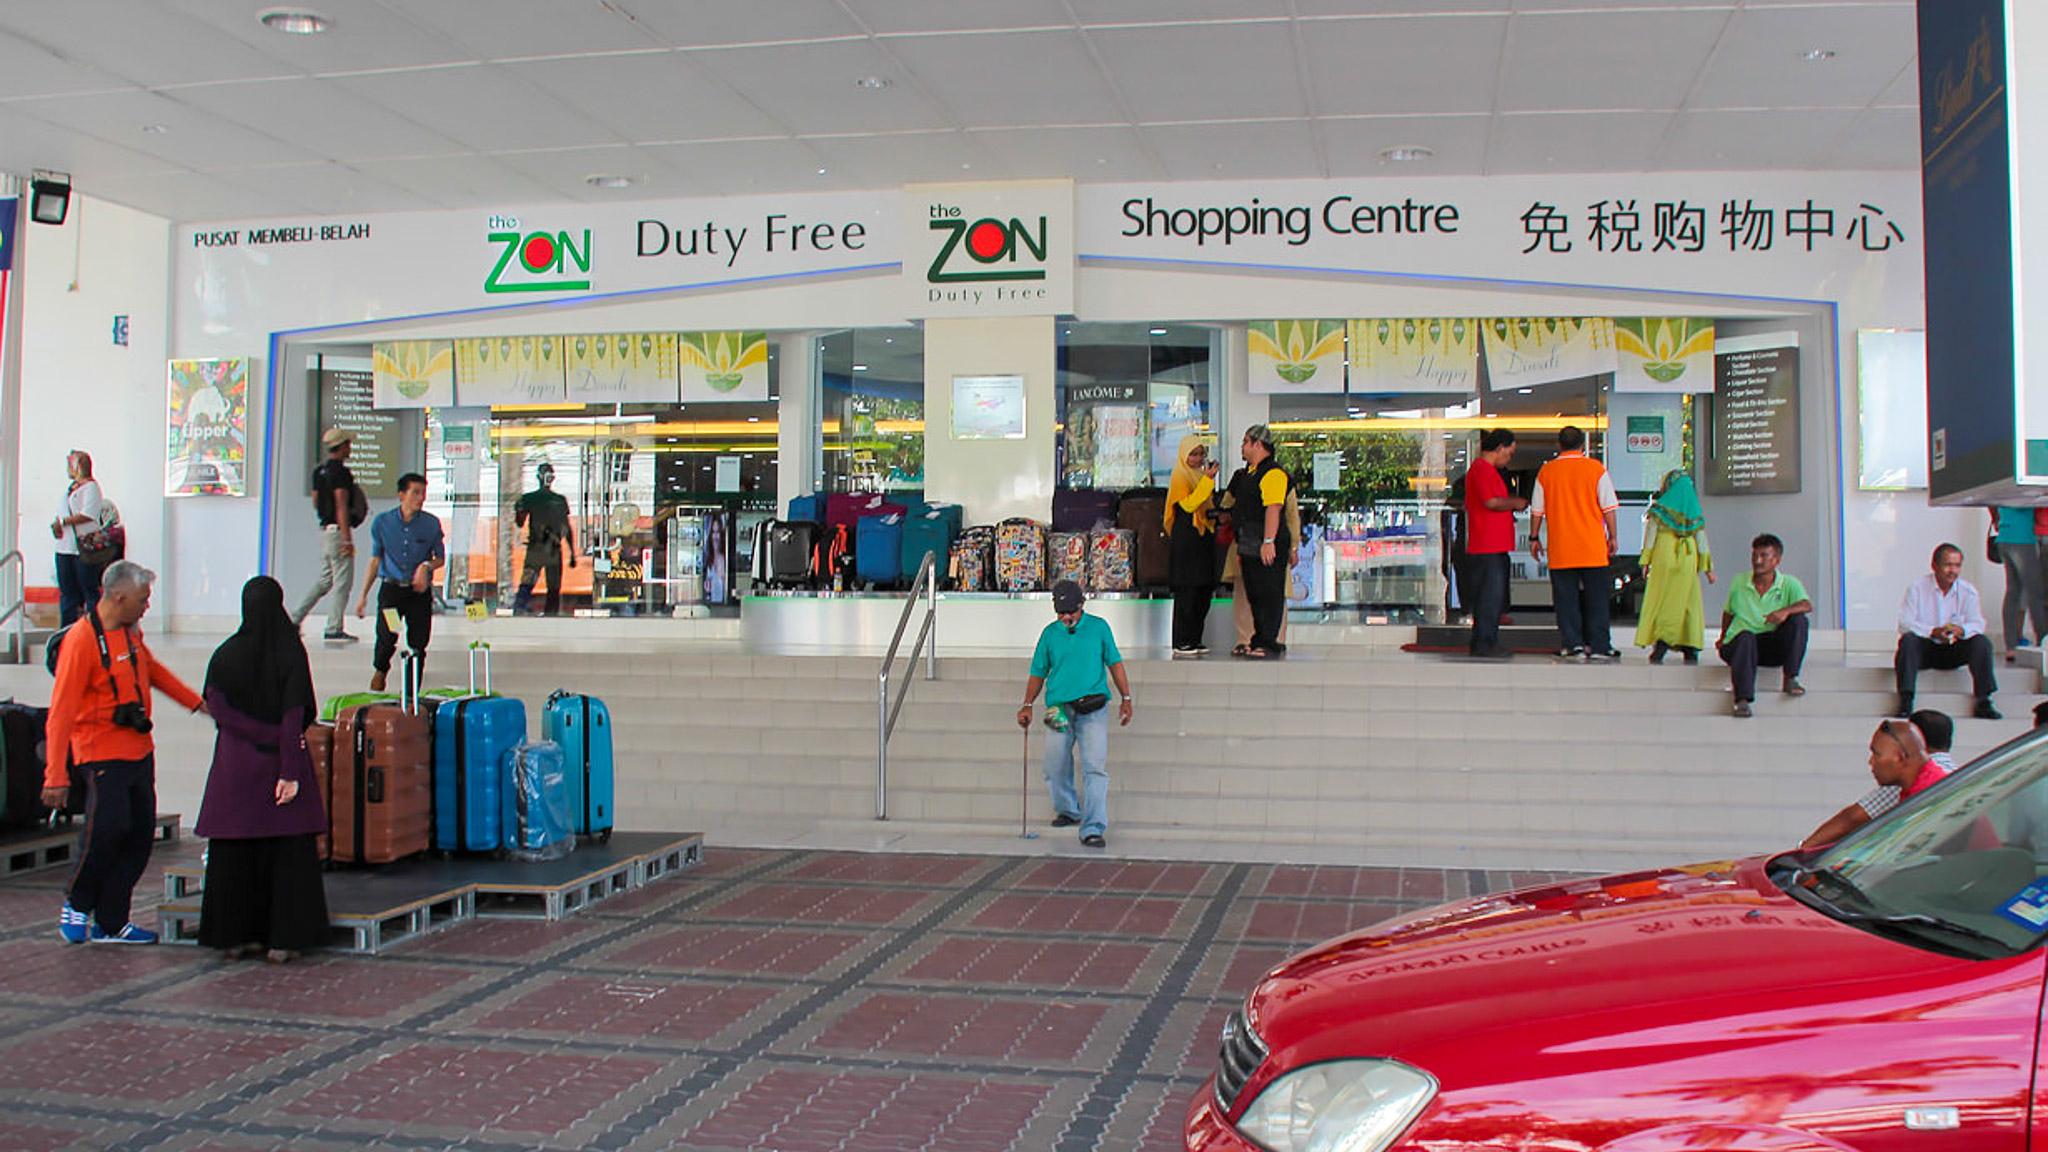 The Zon Shopping Paradise